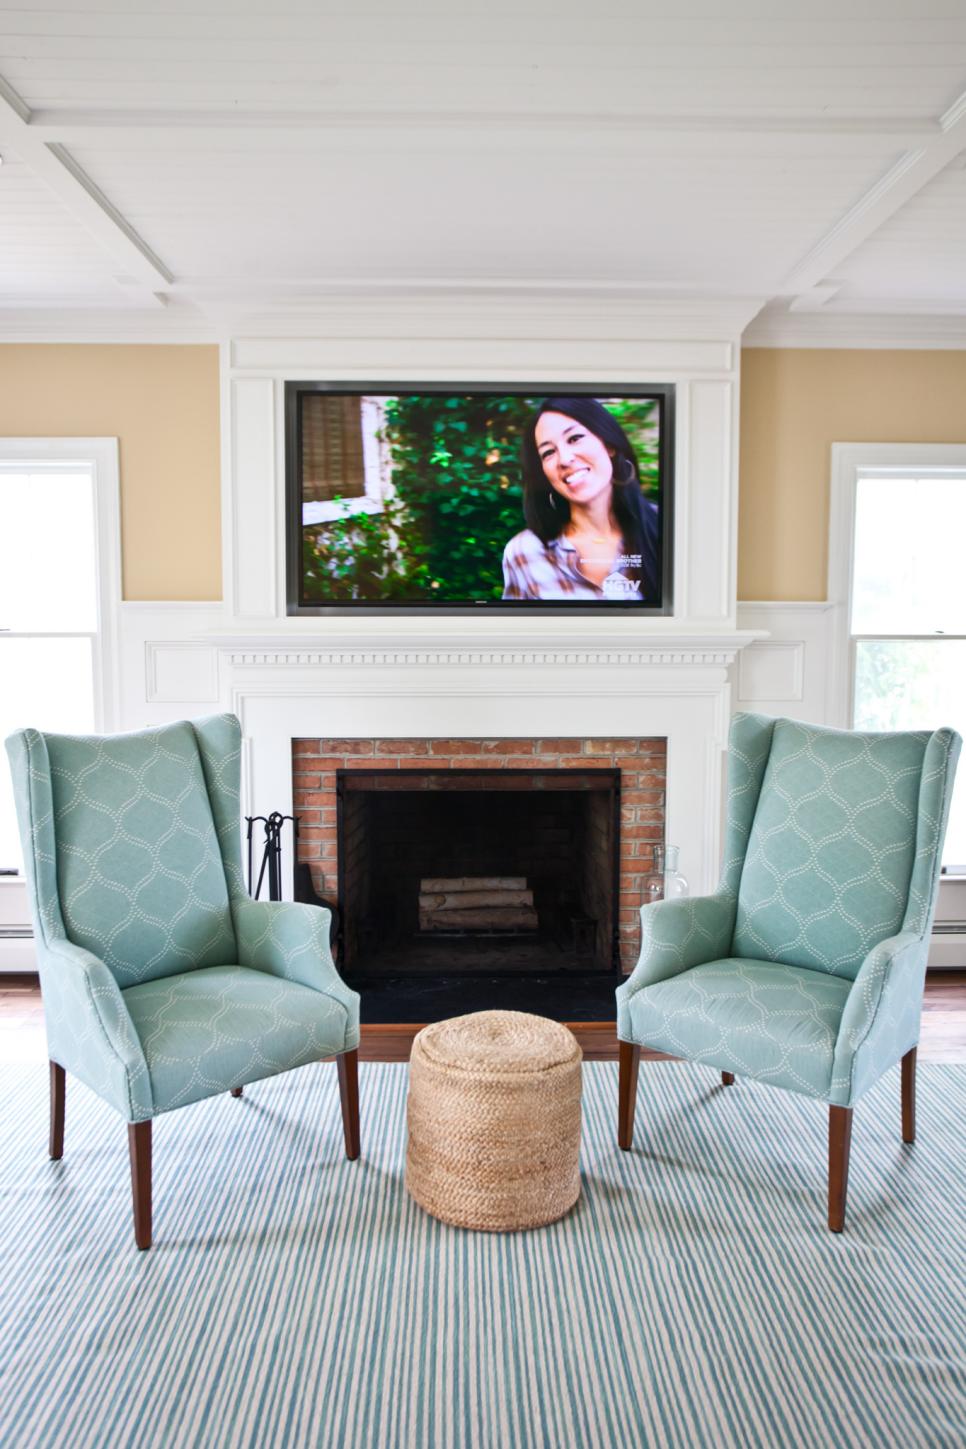 Coastal-Inspired Living Room is Cozy, Inviting | HGTV